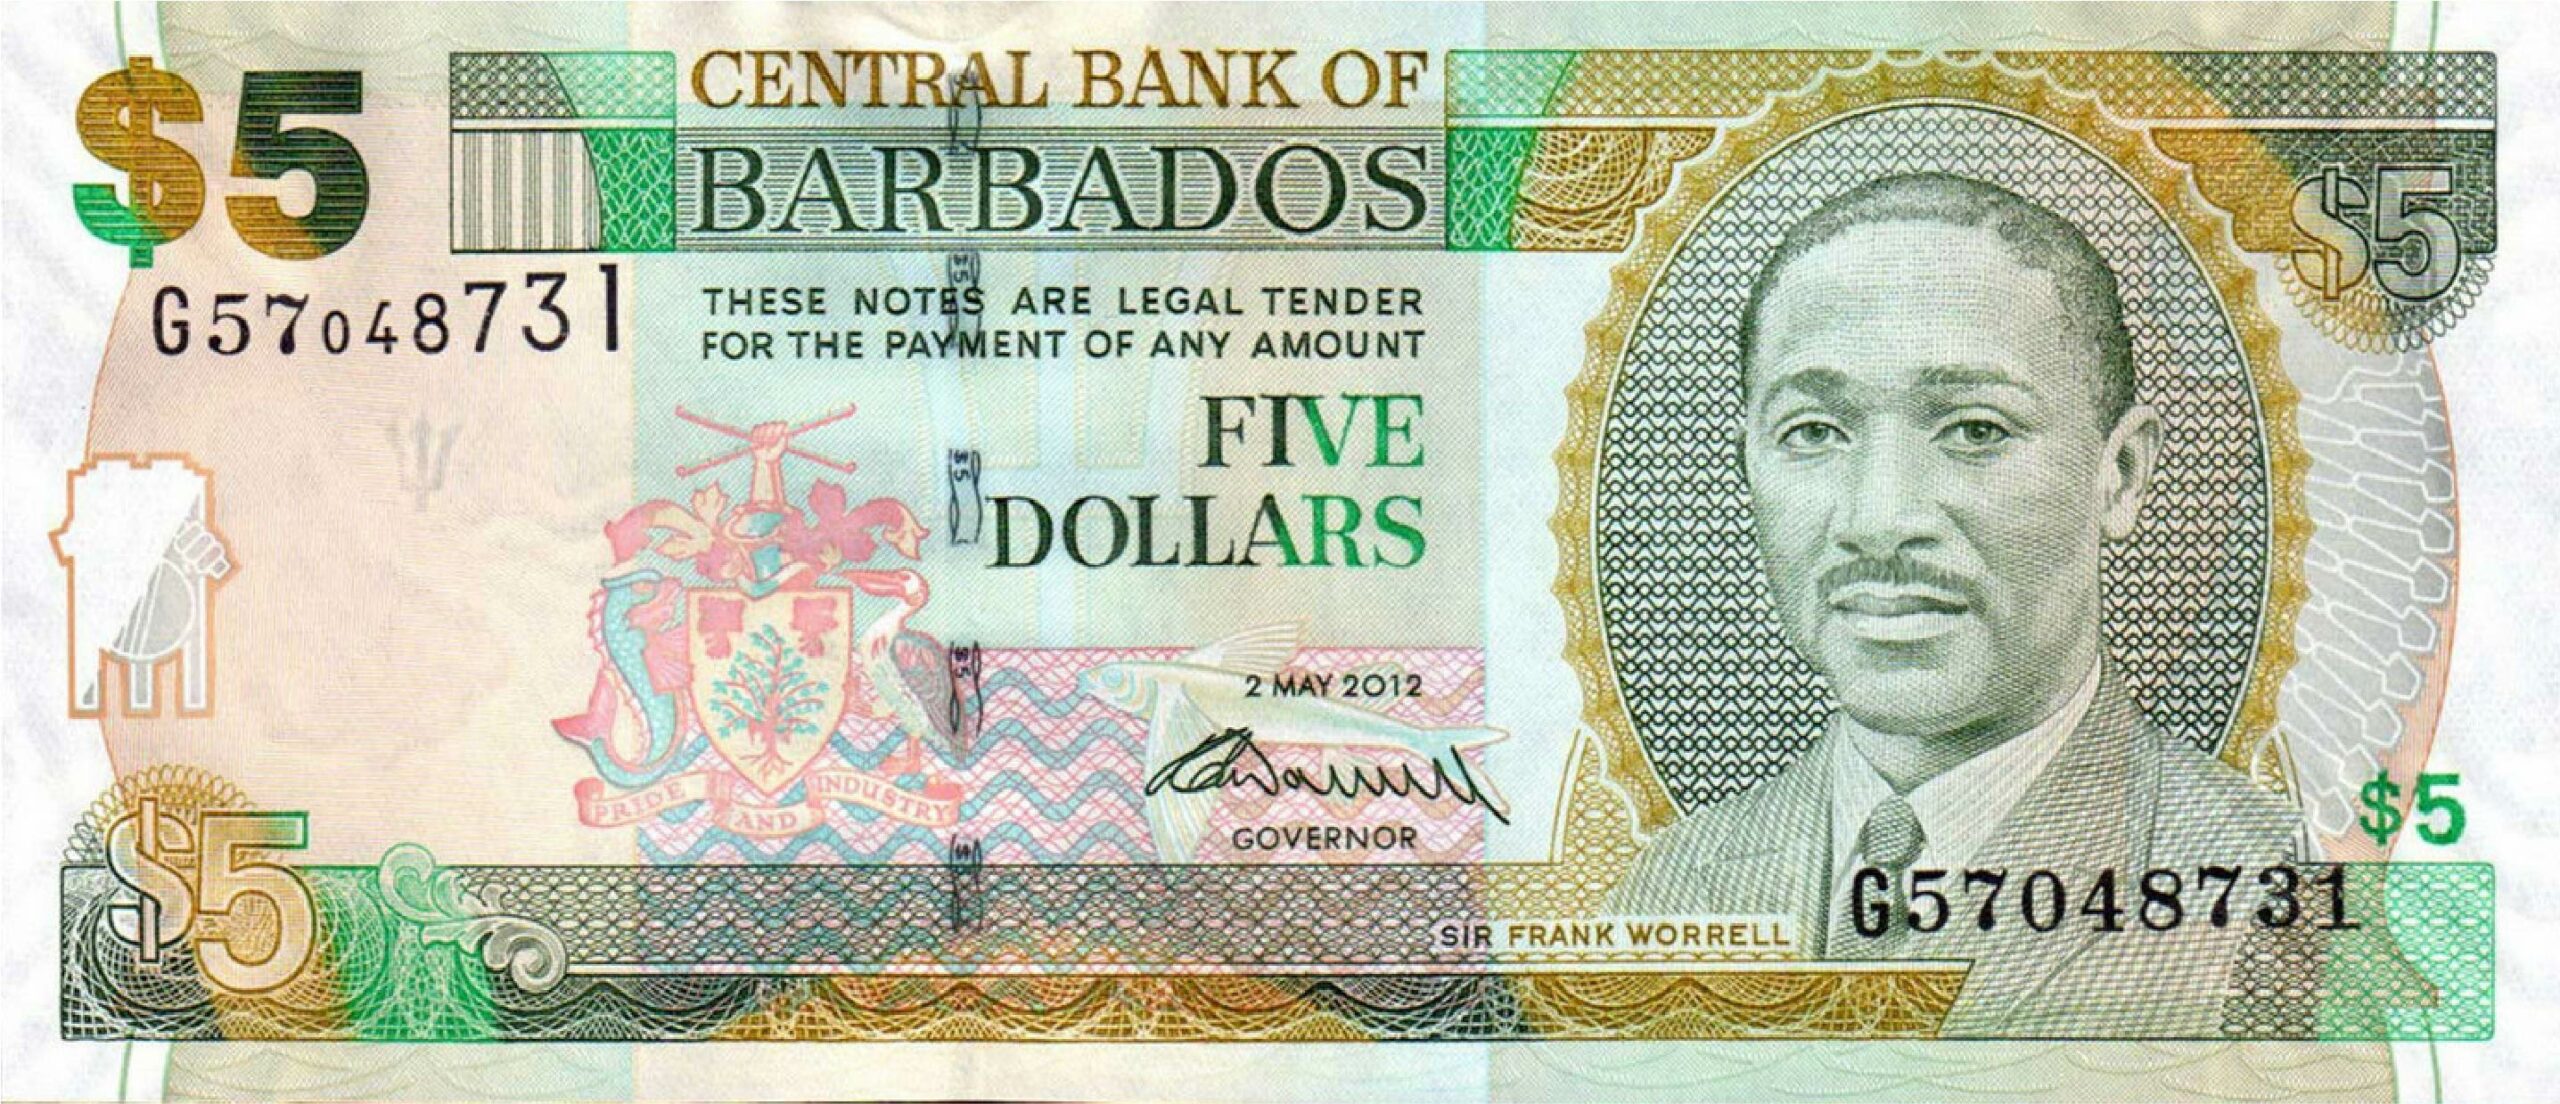 5 Barbados Dollars banknote (National Heroes Square)